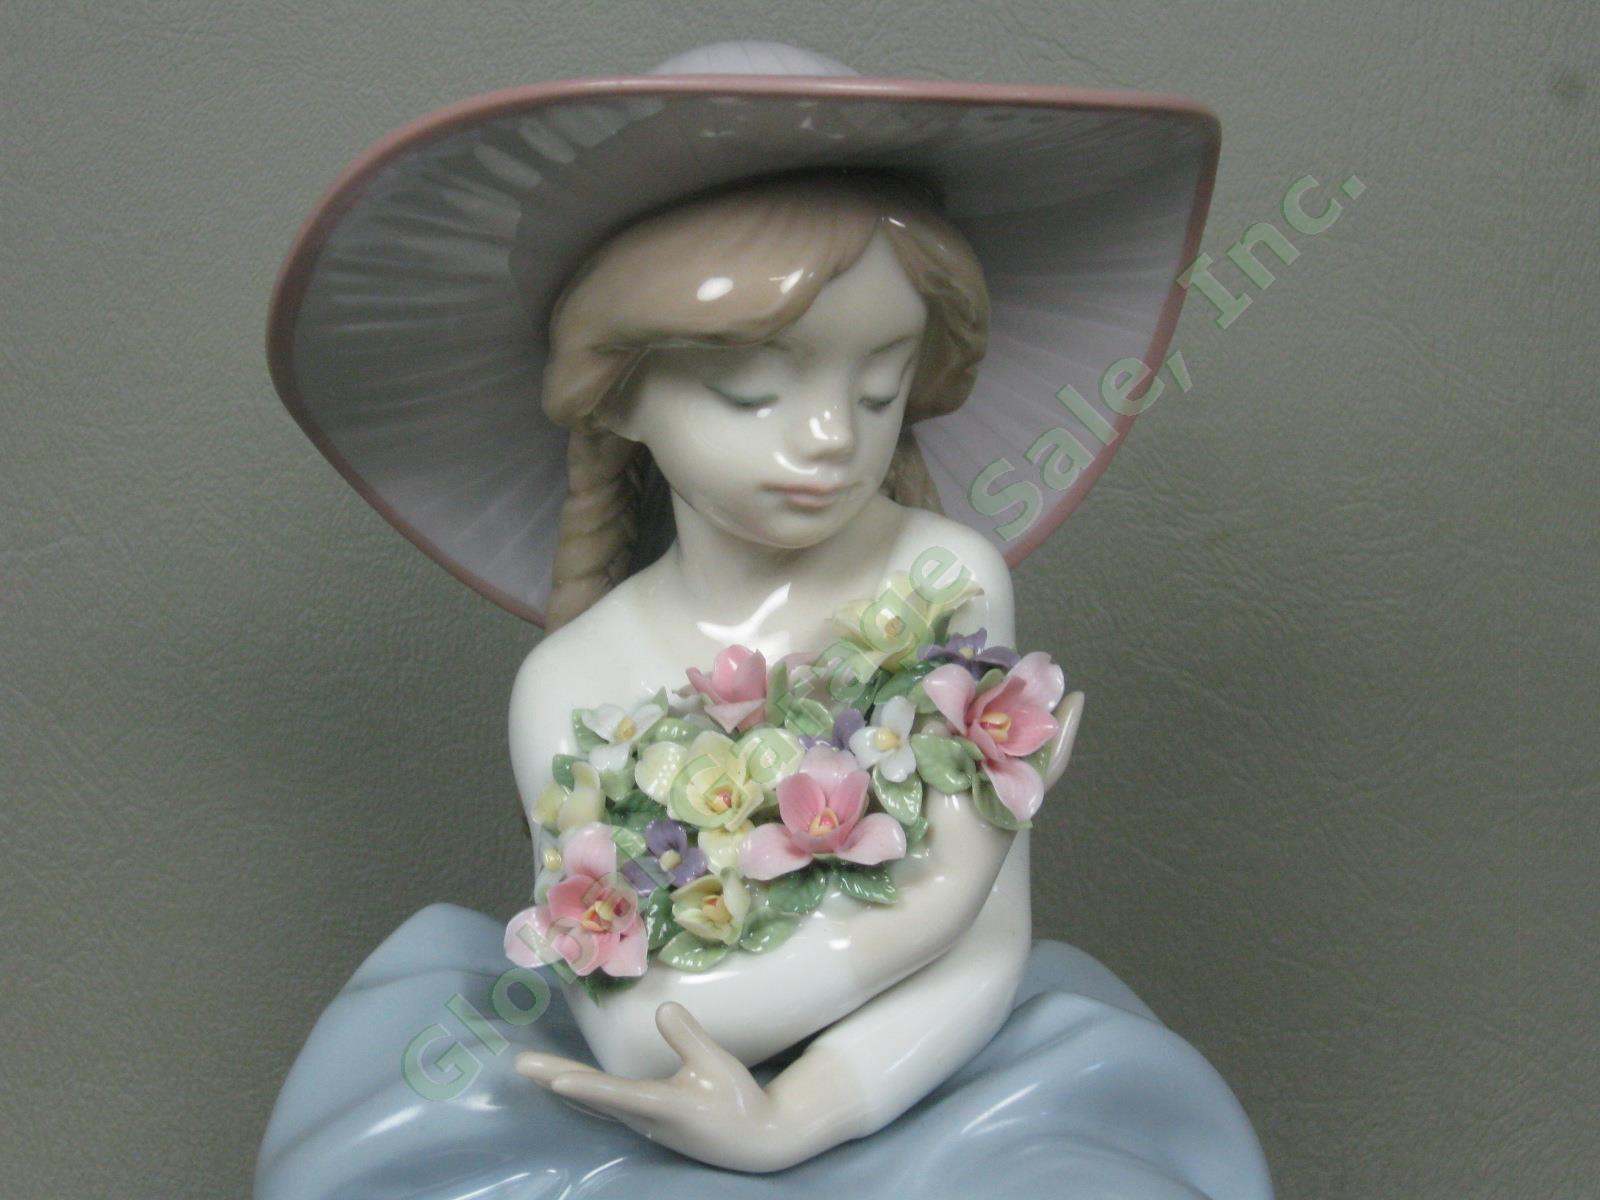 Vtg 1990 Lladro Figurine Fragrant Bouquet #5862 Girl w/ Flowers Mint In Box! NR! 2